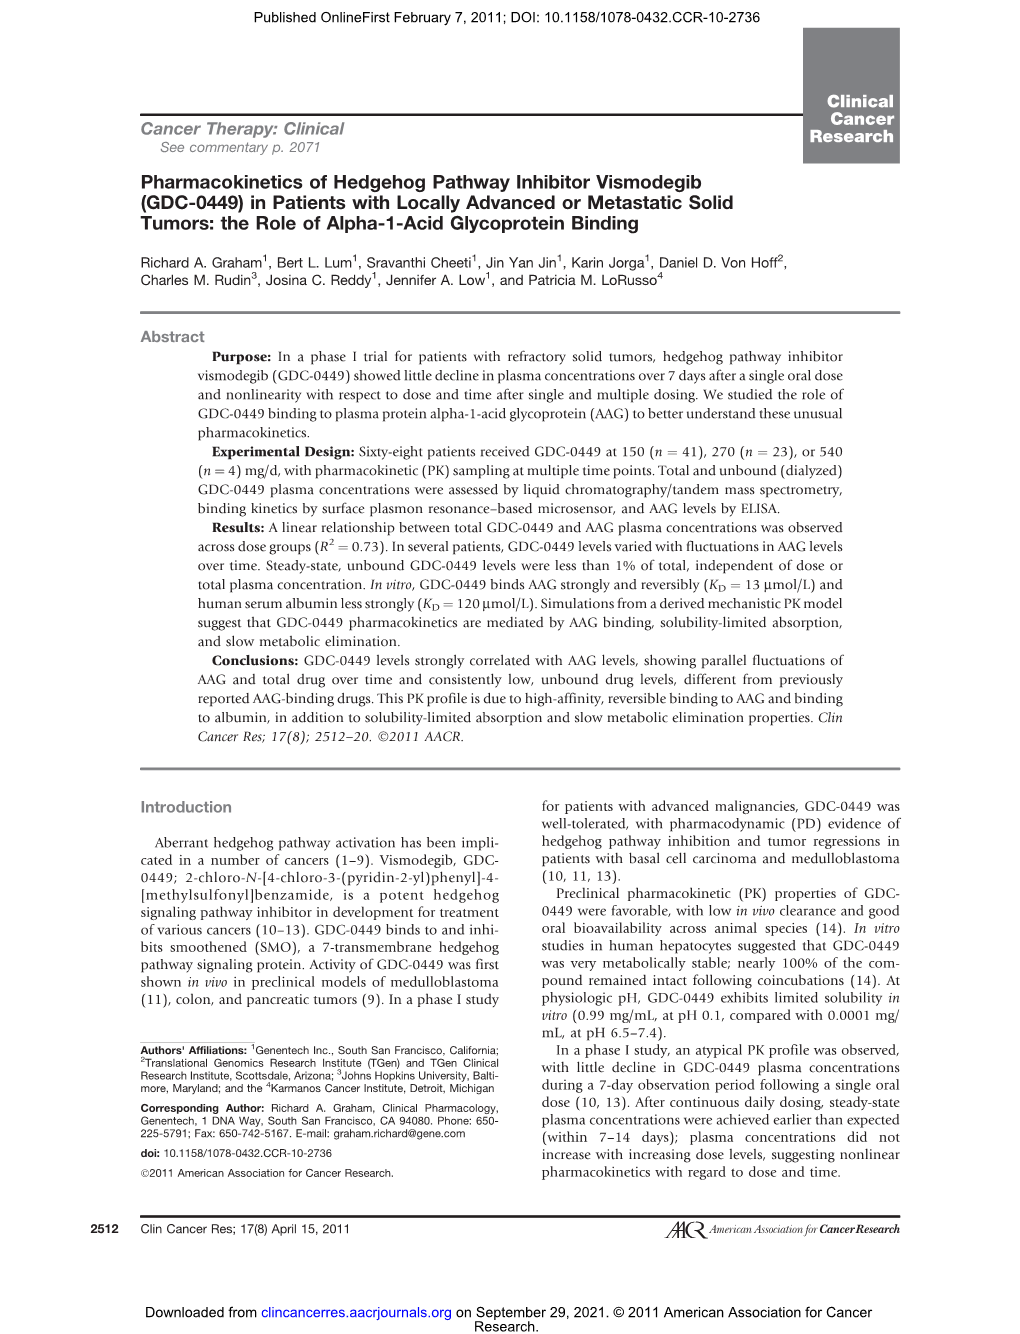 Pharmacokinetics of Hedgehog Pathway Inhibitor Vismodegib